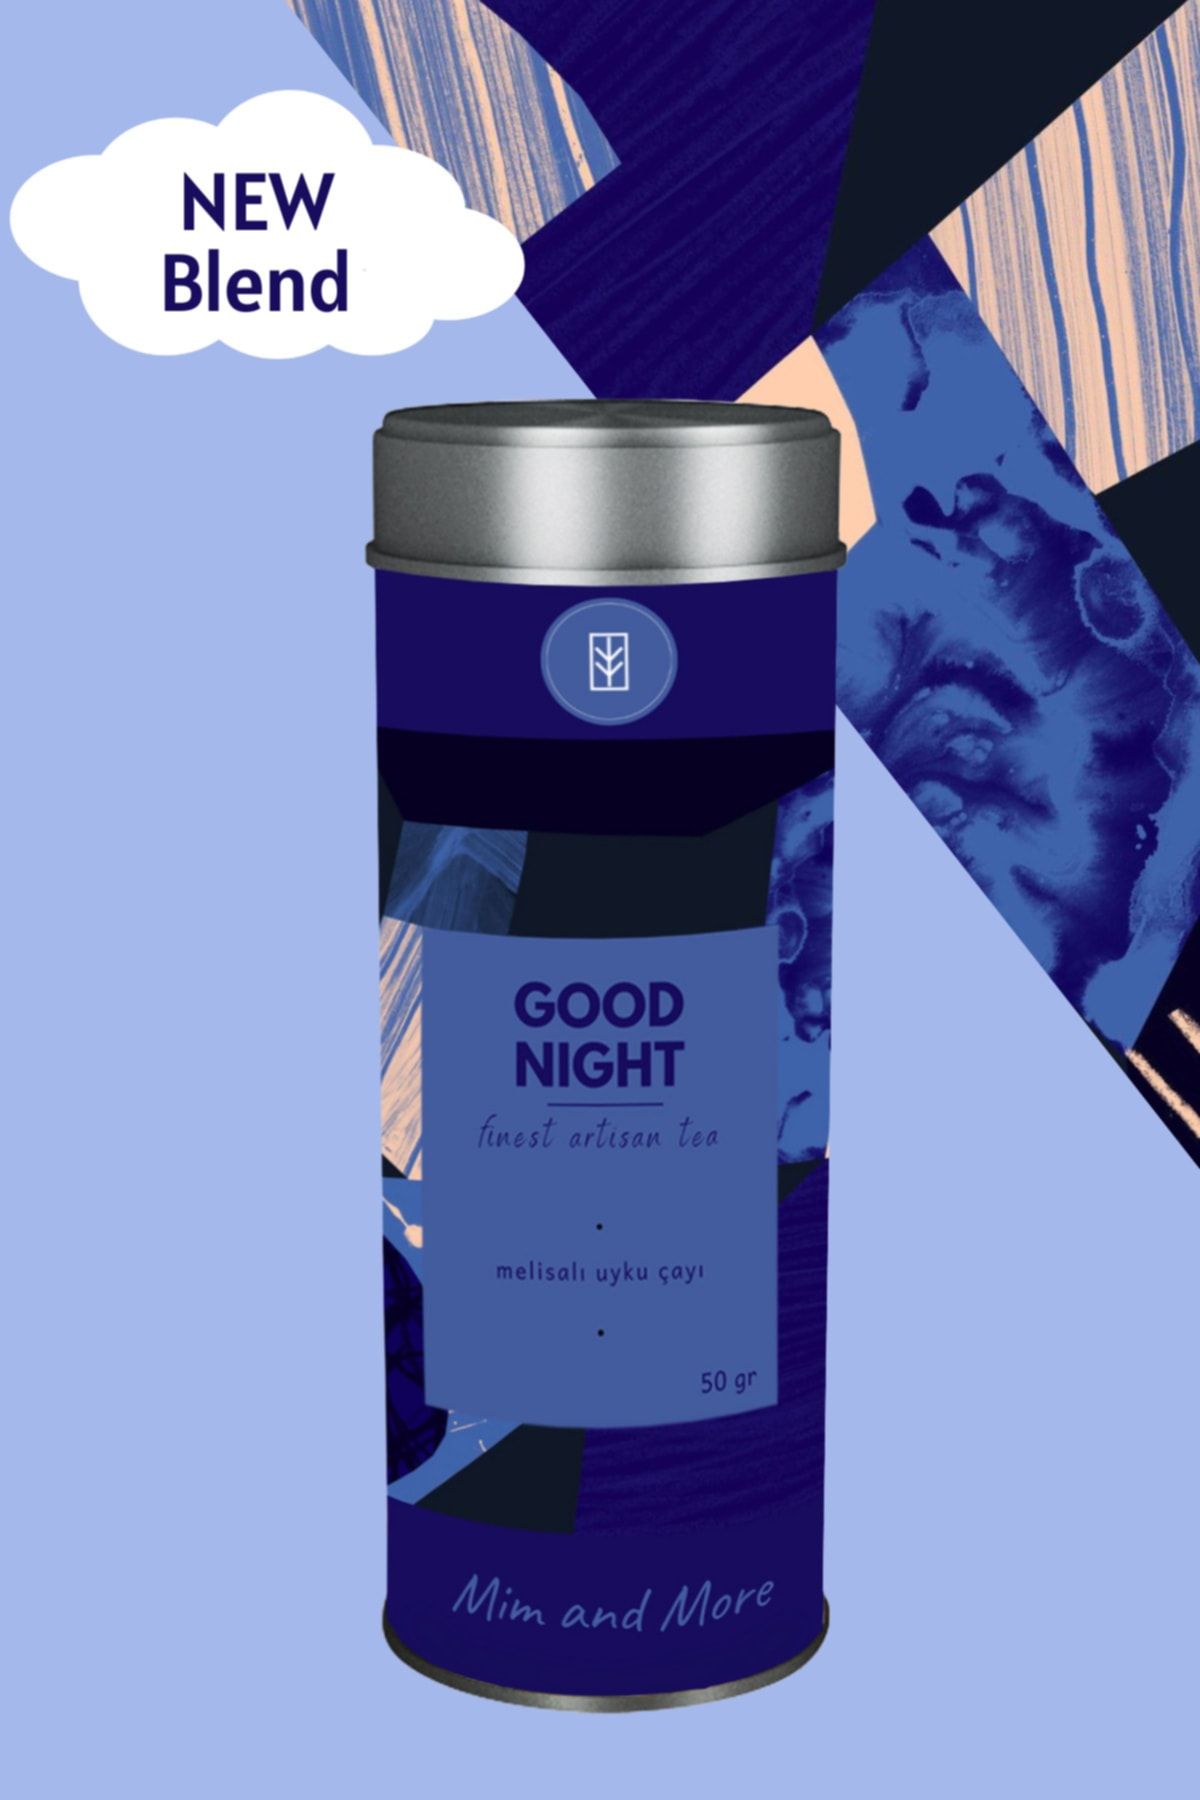 Mim and More Good Night Tea - Melisalı Uyku Çayı